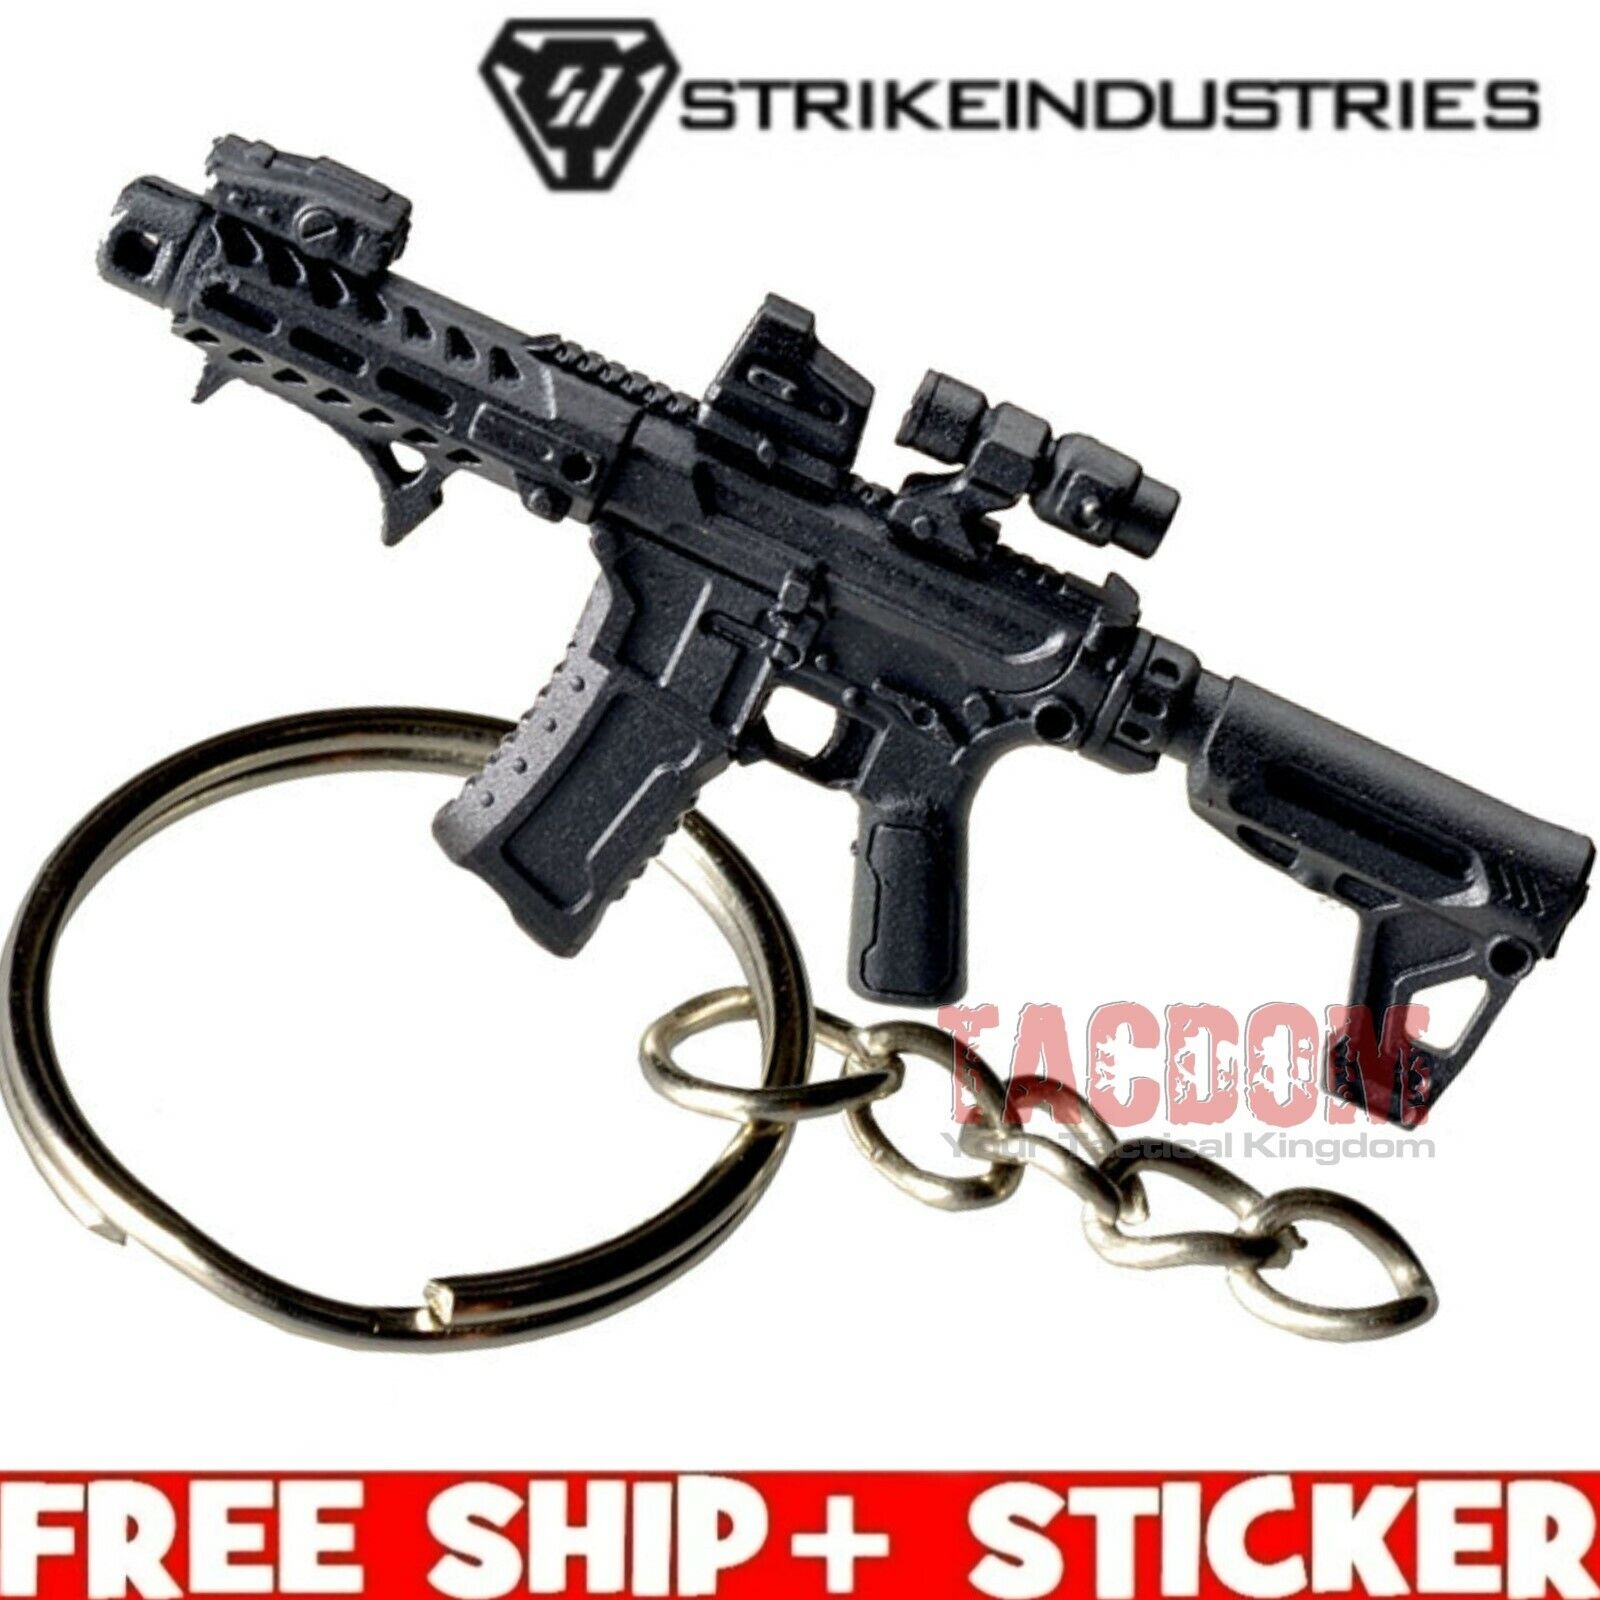 Strike Industrie SBR STRIKE RAIDER Keychain Black Plastic SI Key Chain